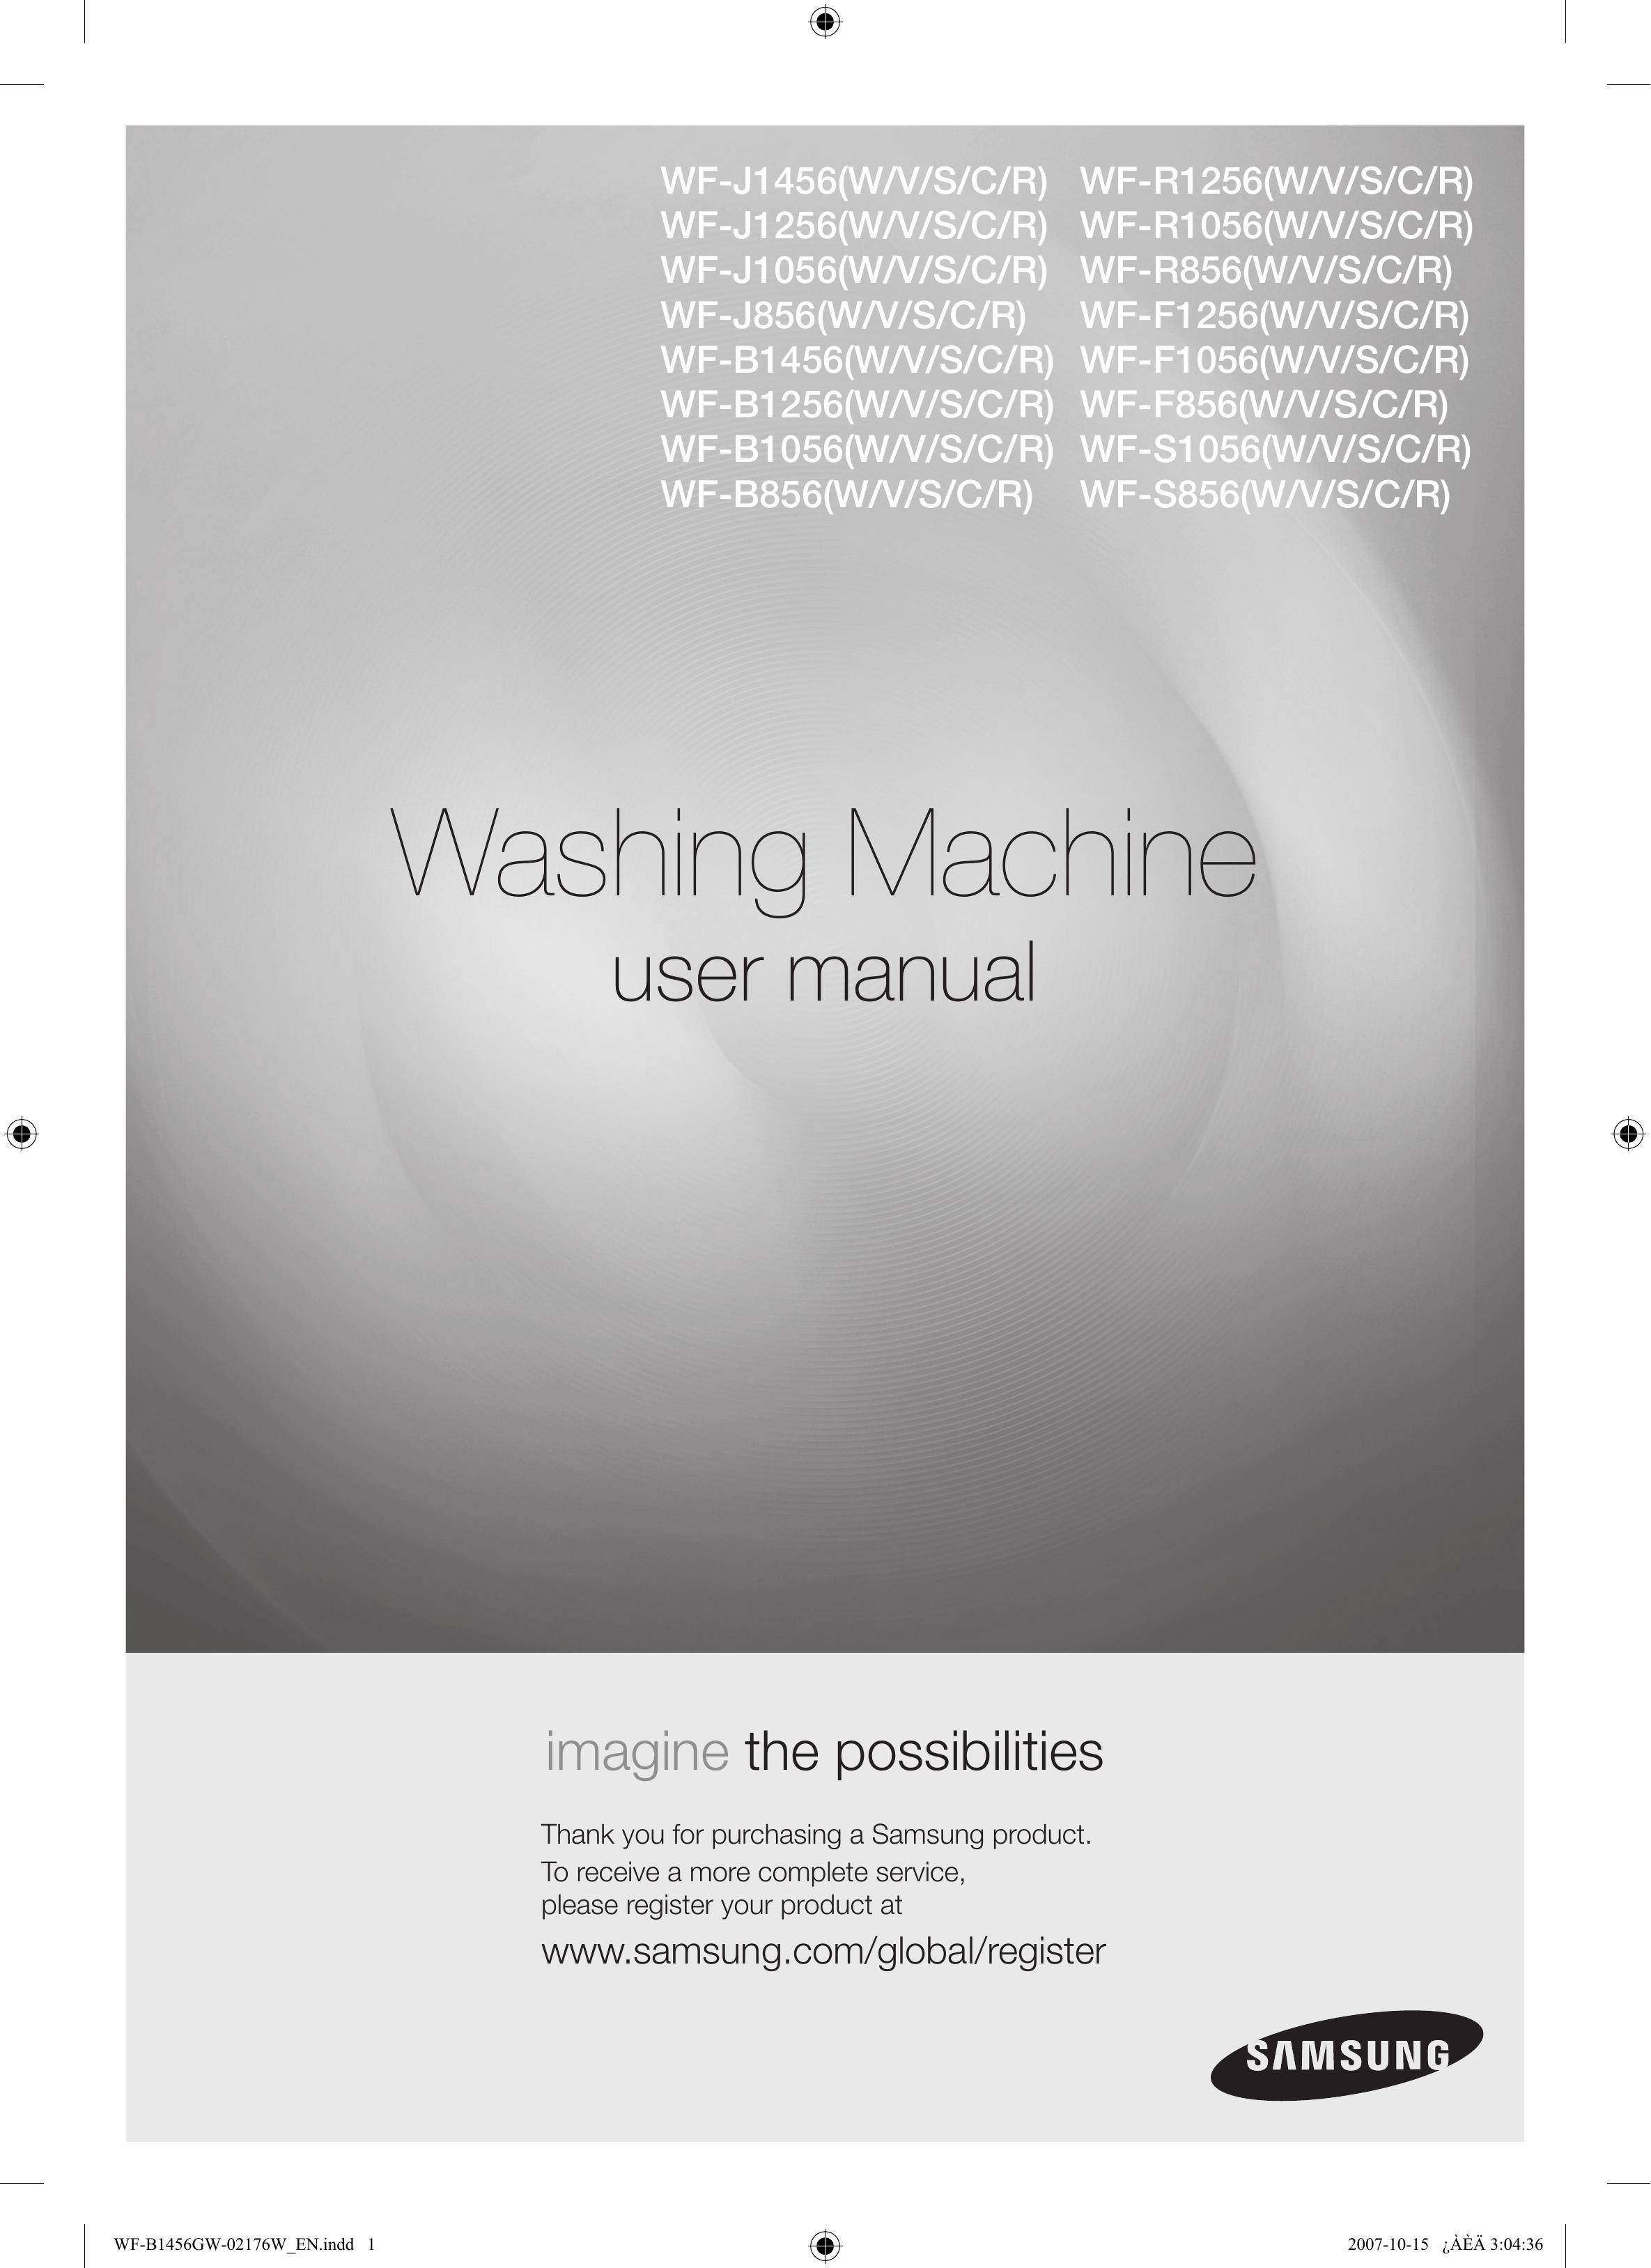 Samsung WF-B1256 Washer/Dryer User Manual